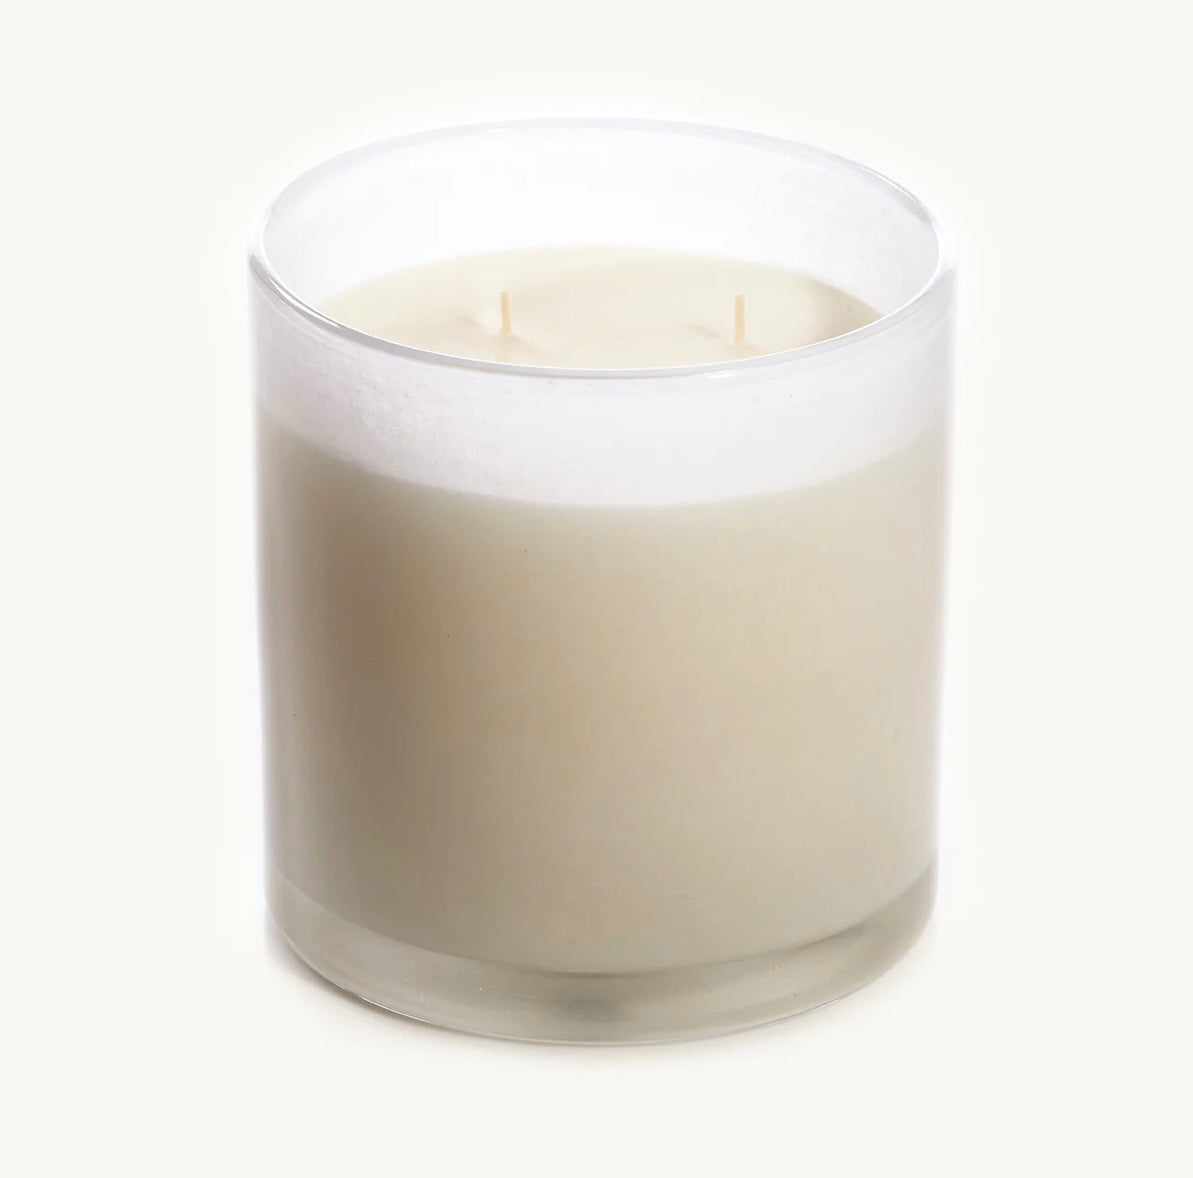 L'Heure du Thé Cylinder Candle - White - Large 42 oz.